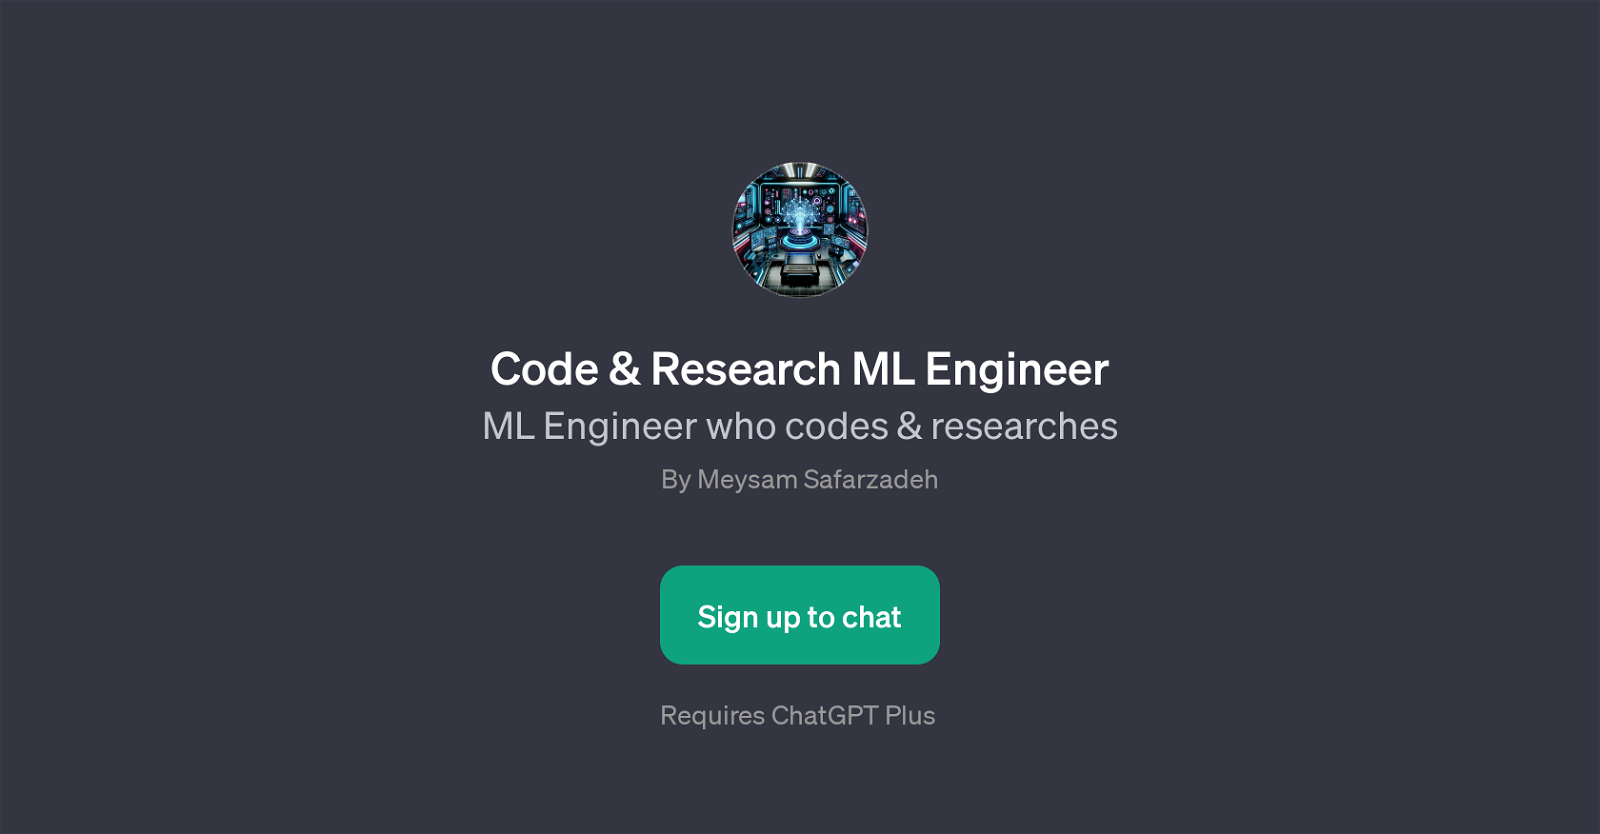 Code & Research ML Engineer website